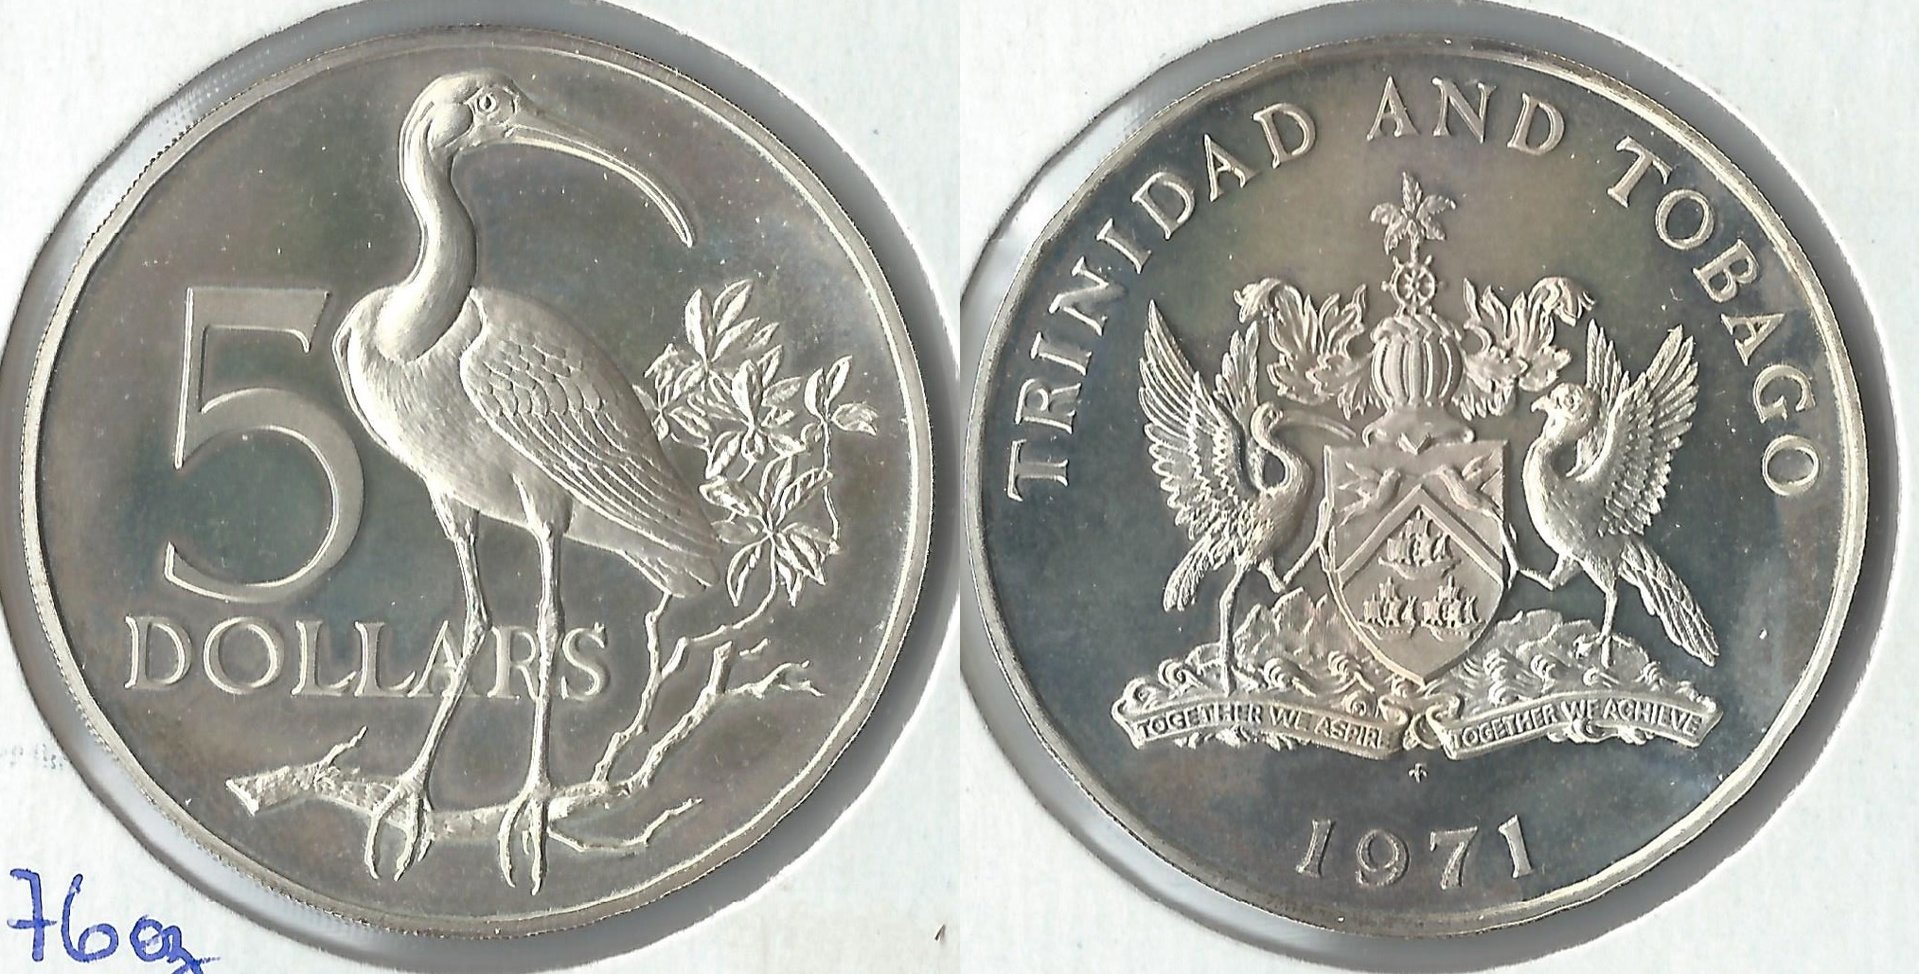 1971 trinidad and tobago 5 dollars.jpg